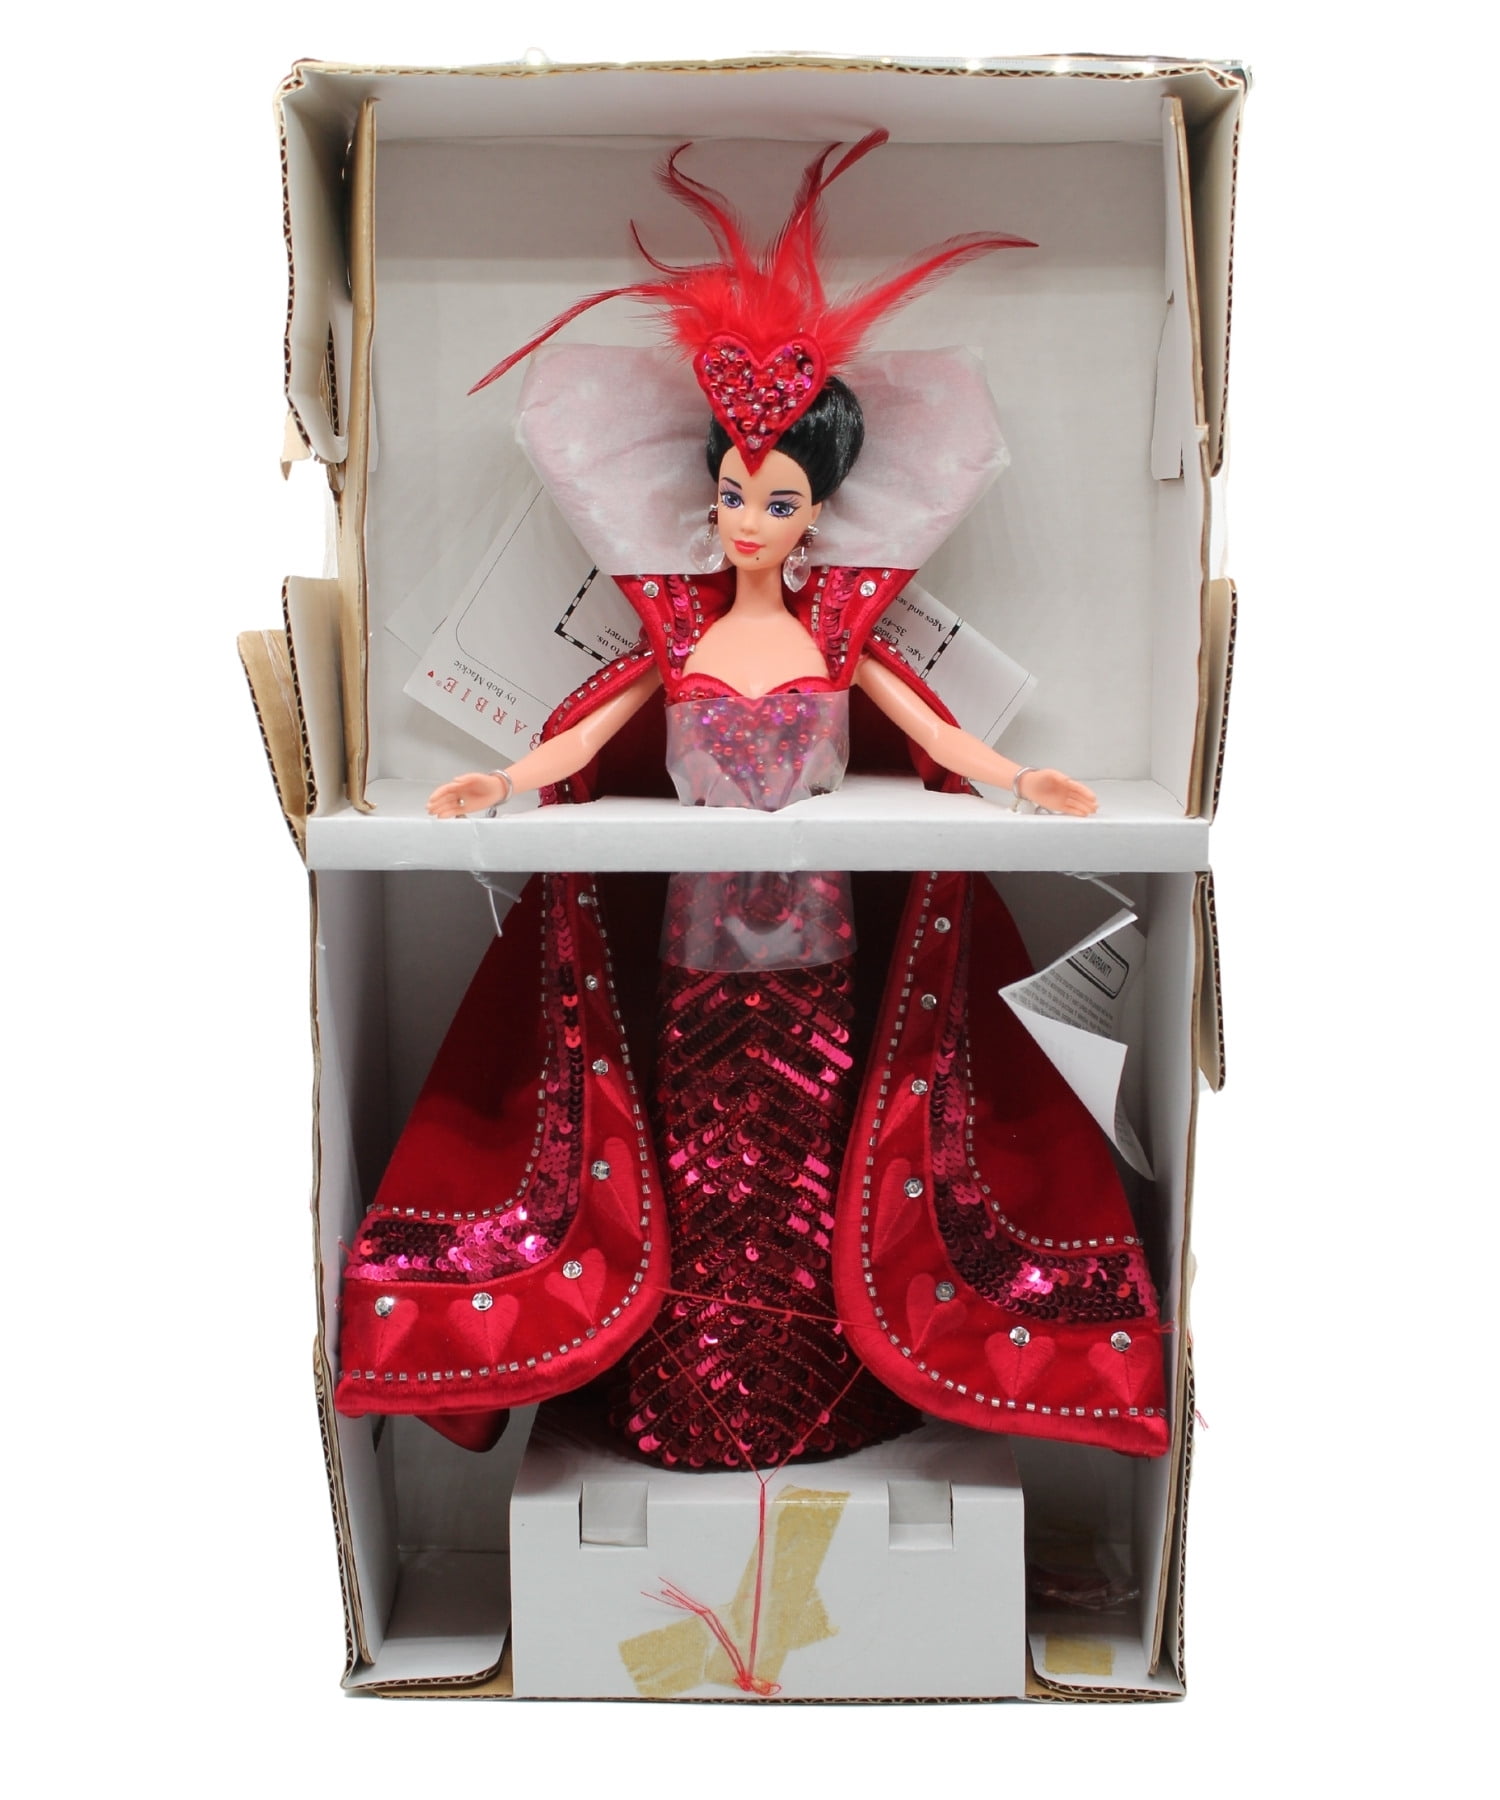 1994 Queen of Hearts Barbie, NRFB, (12046) Non-Mint Box | Bob Mackie